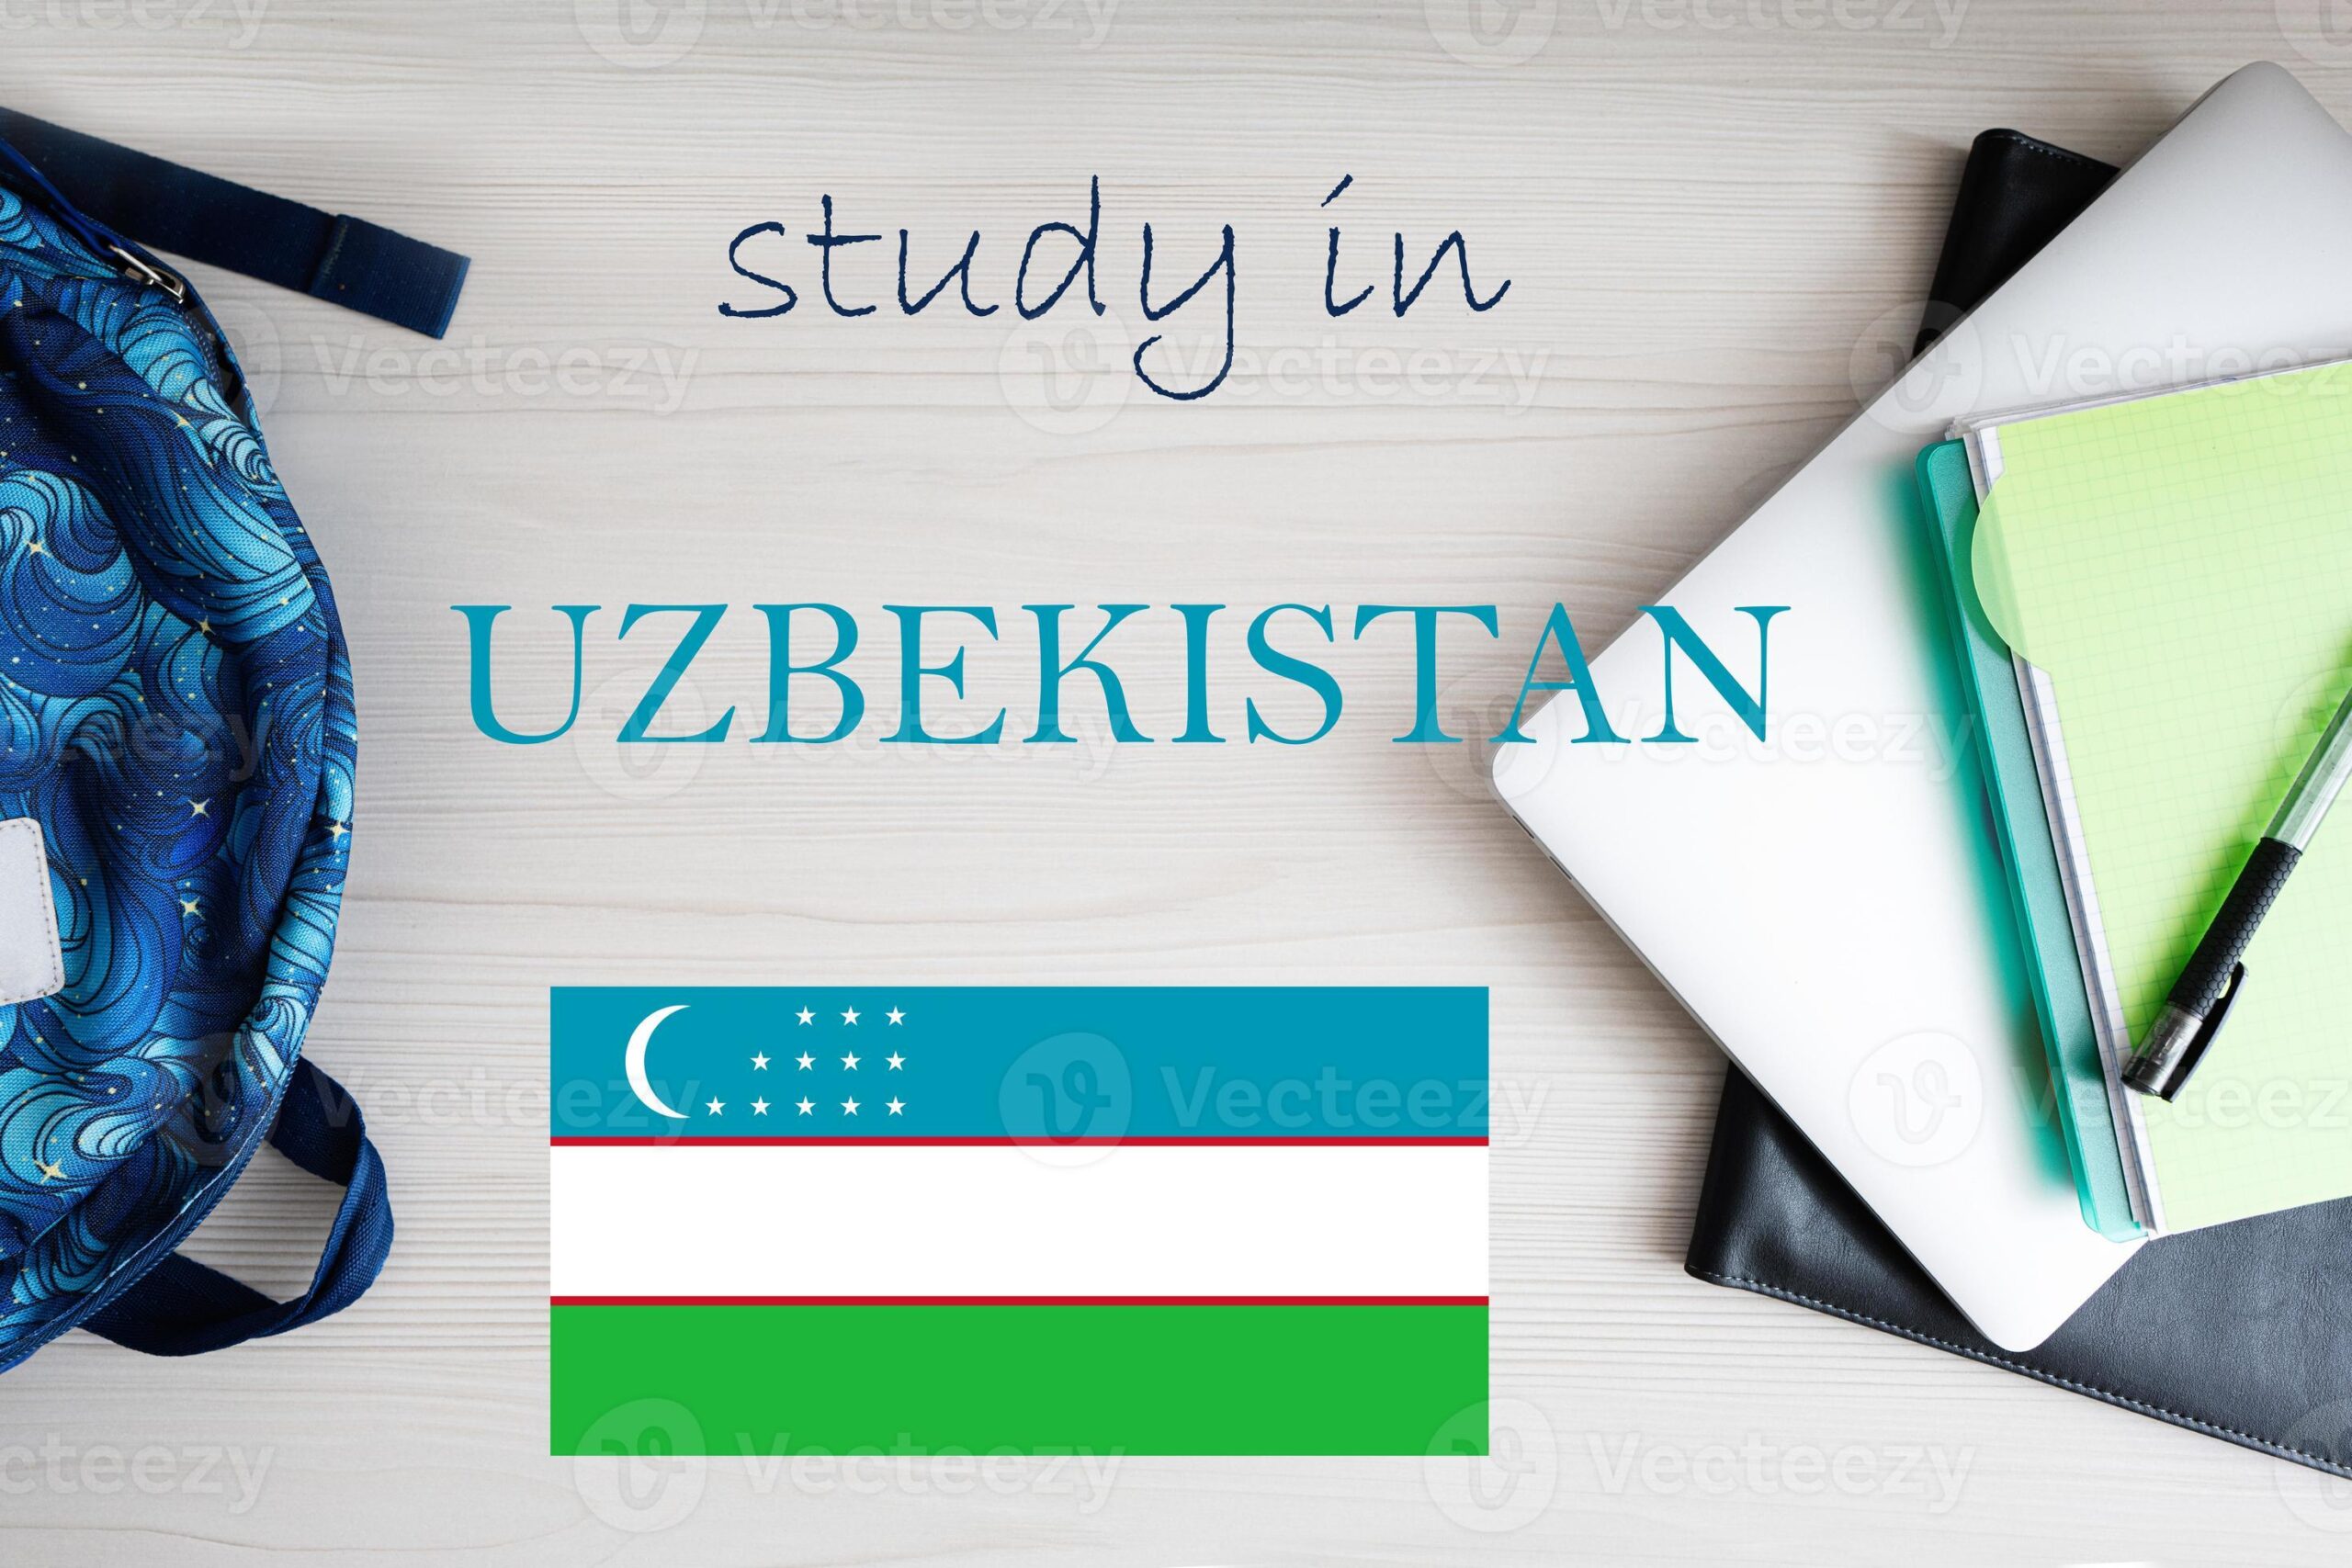 Study in Uzbekistan